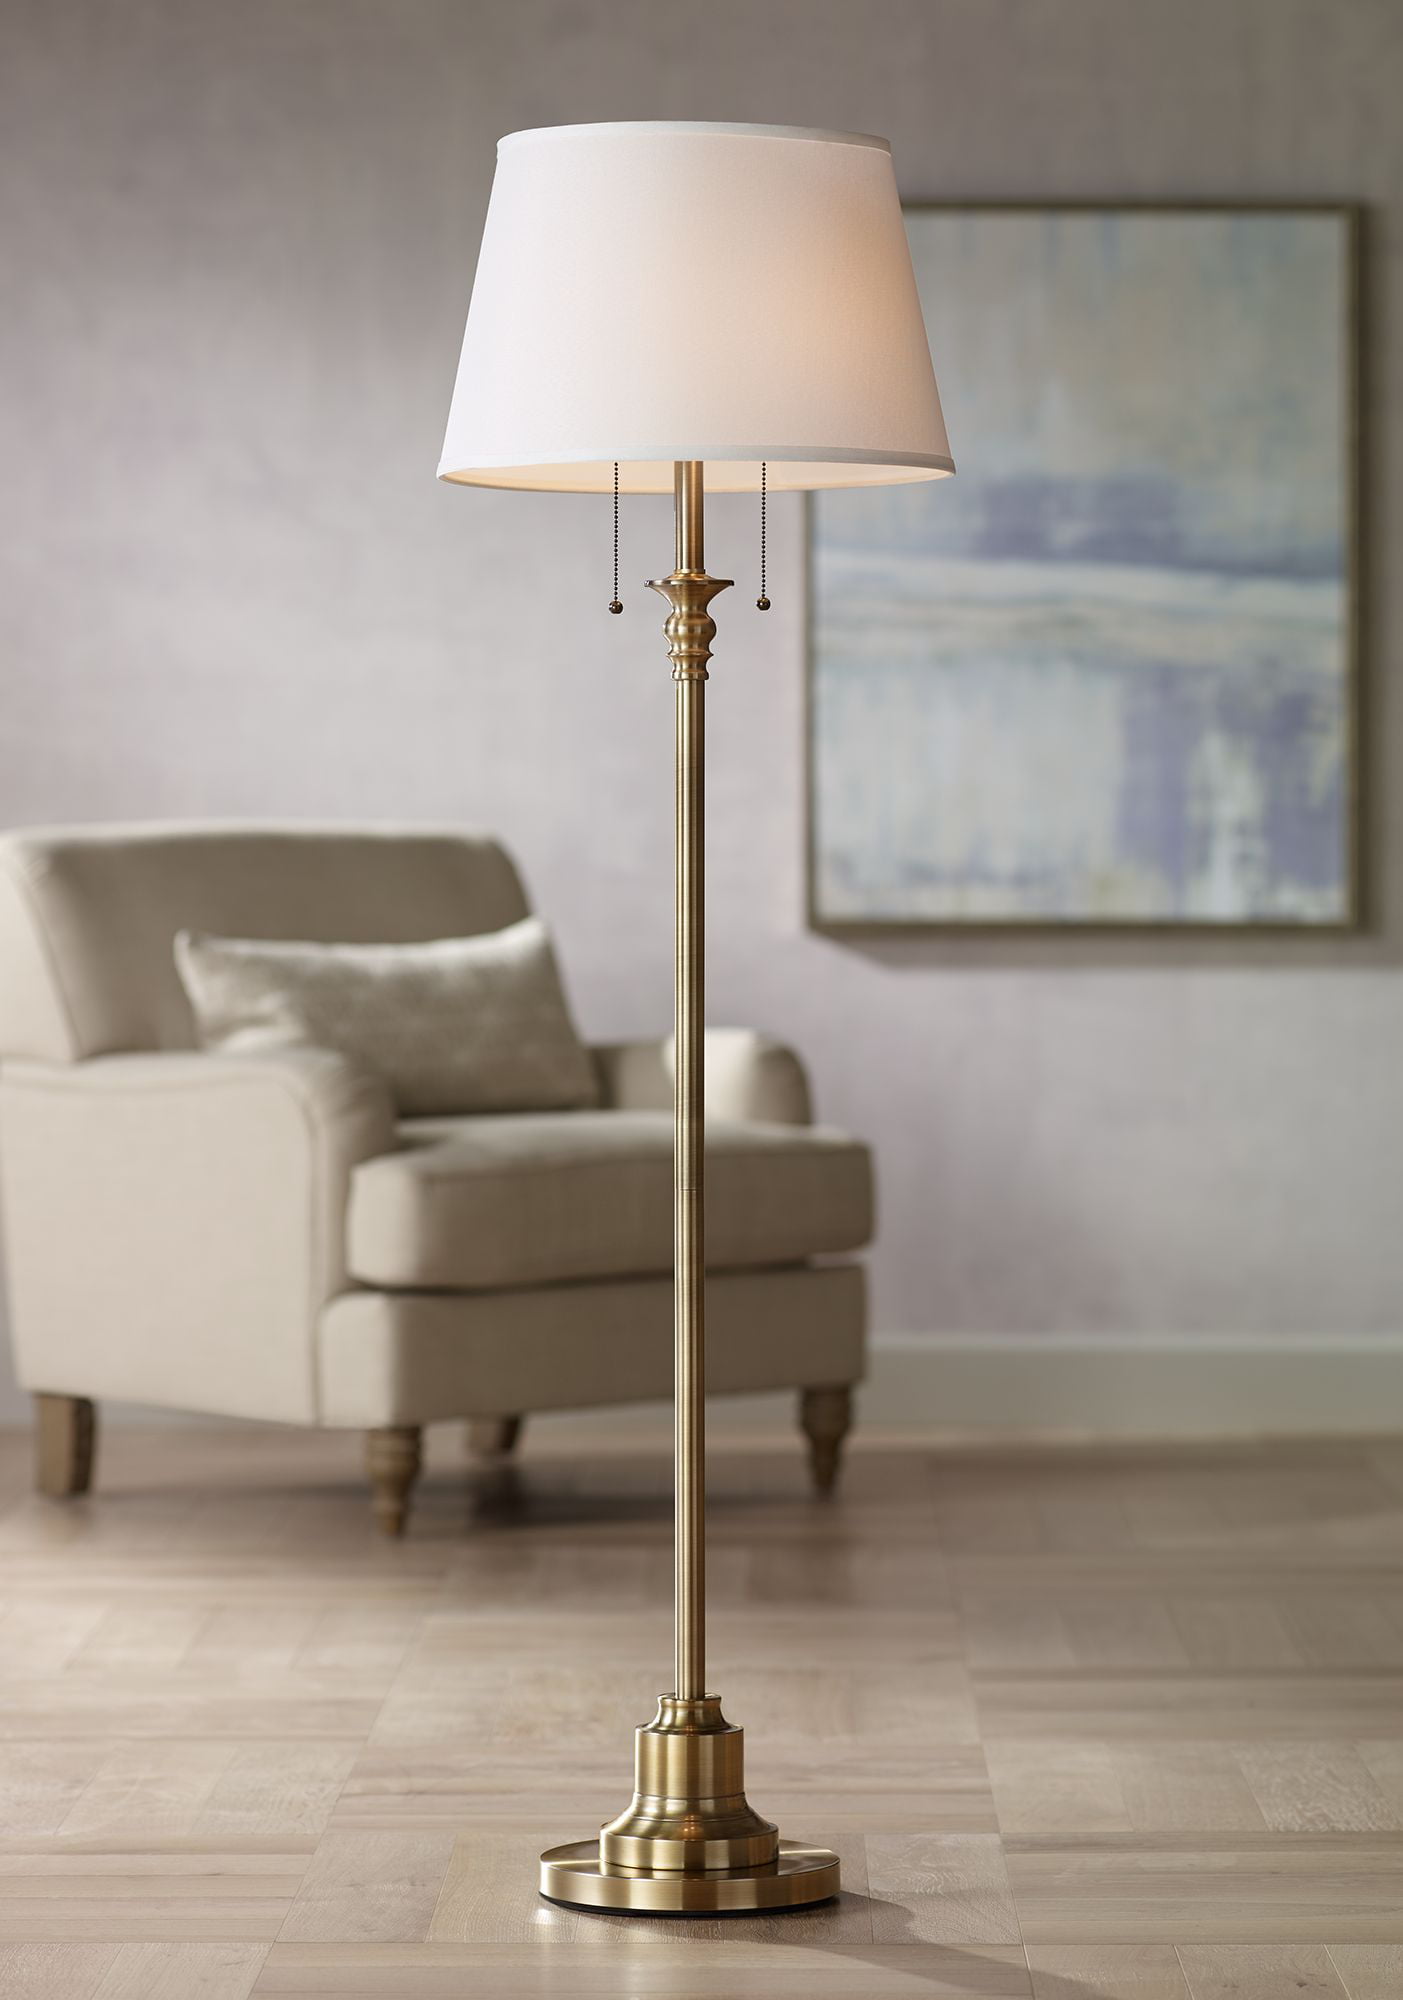 360 Lighting Traditional Floor Lamp Brushed Antique Brass Metal Off